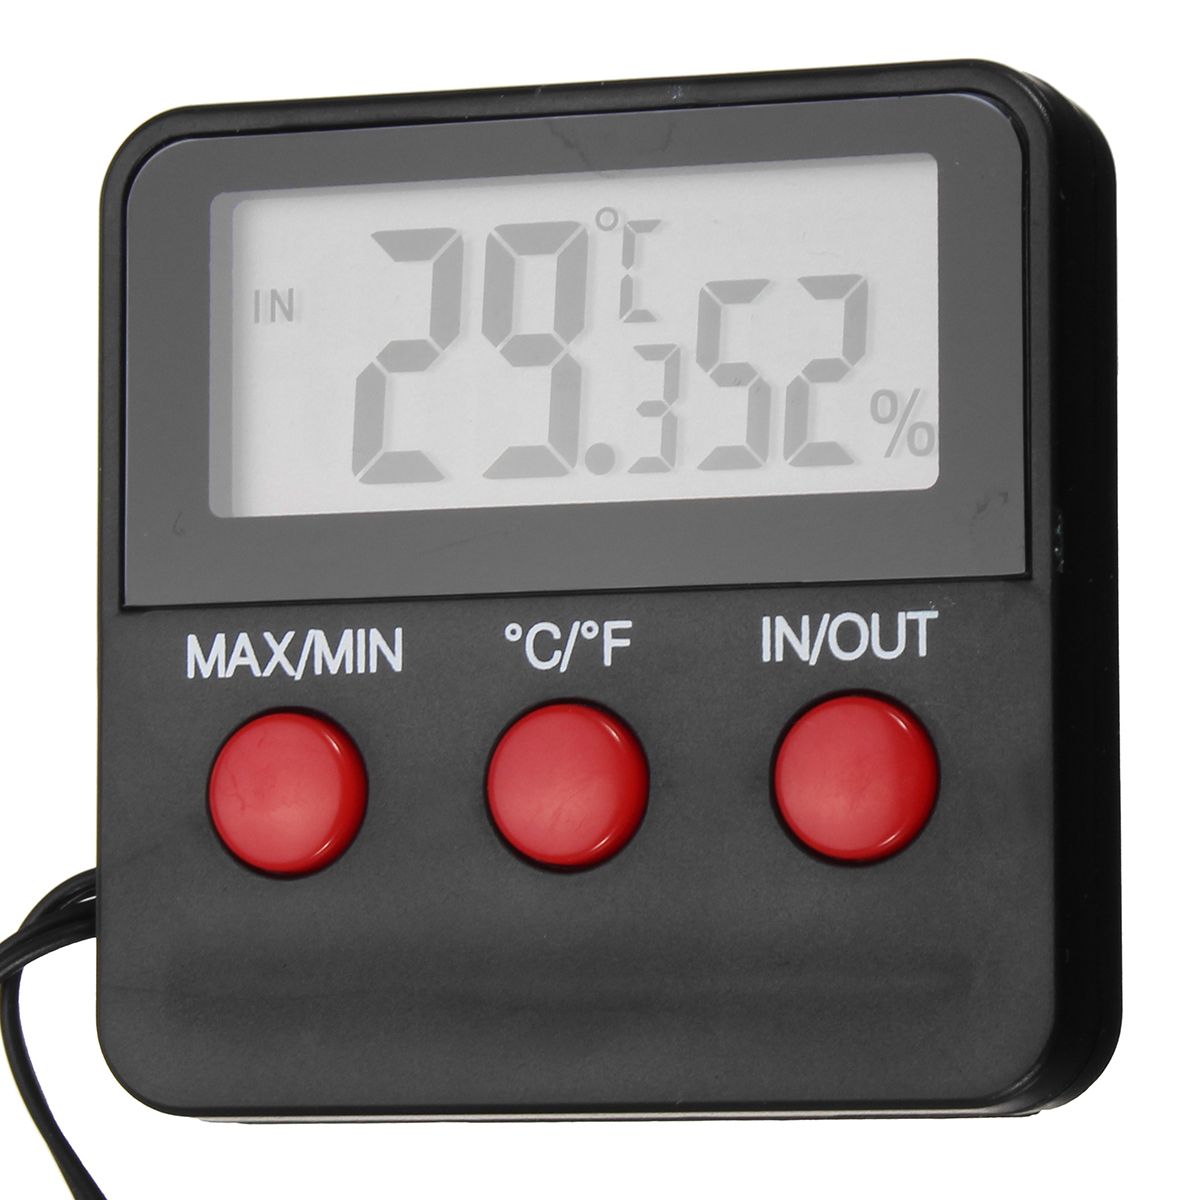 Digital-Thermometer-Hygrometer-Humidity-Meter-Probe-for-Egg-Incubator-Pet-1207923